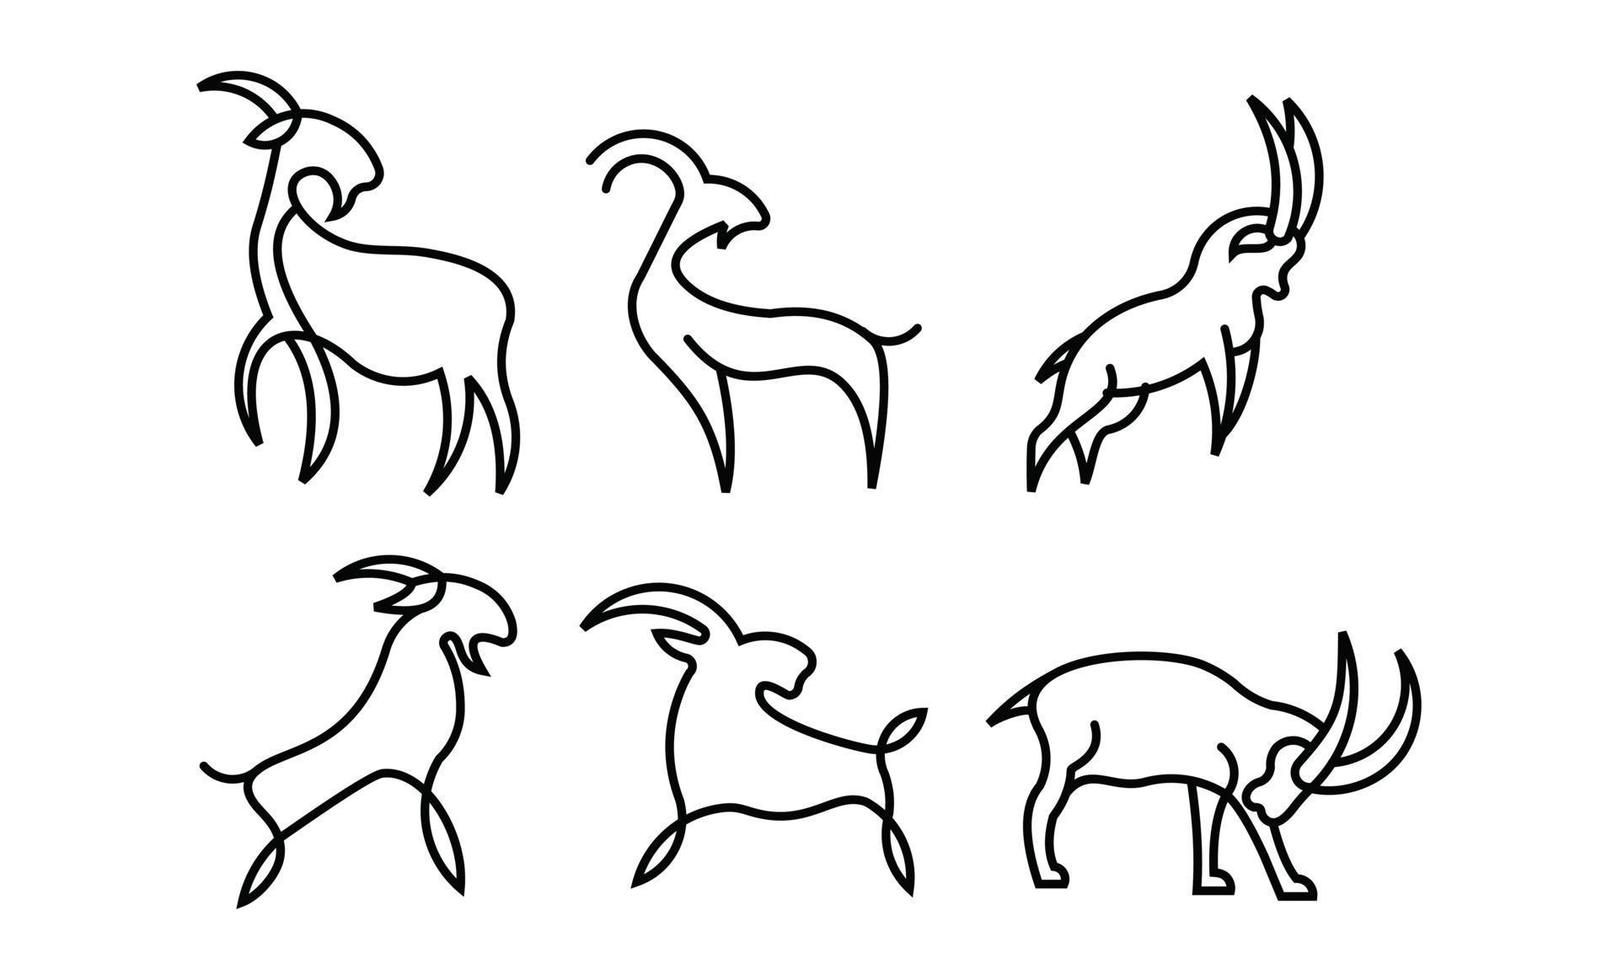 outline animal goat sheep rams line butting set logo icon designs vector simple black illustration